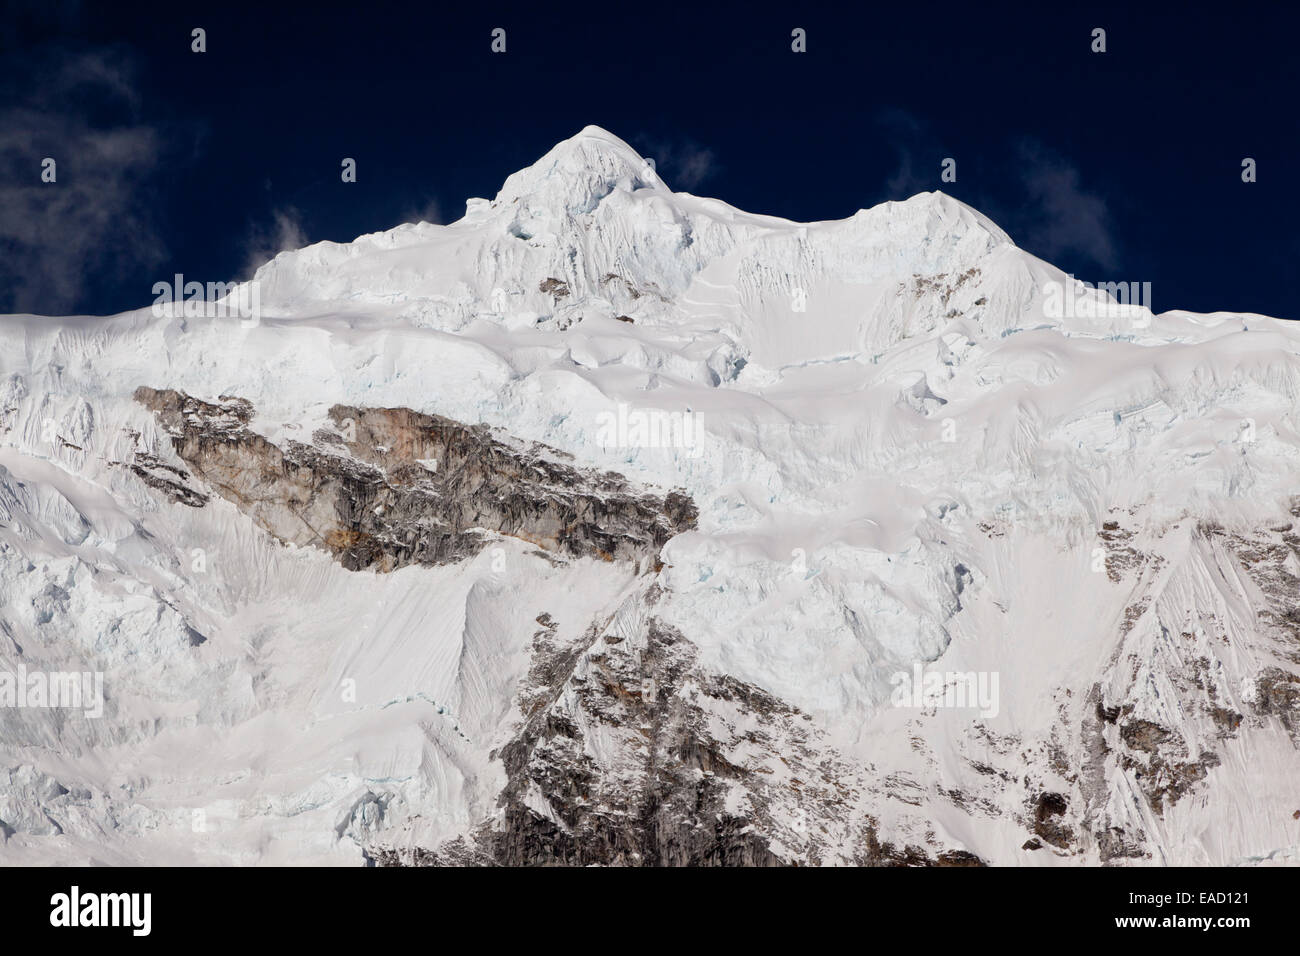 The snow-covered mountain Nevado Chopicalqui, Cordillera Blanca, Peru Stock Photo